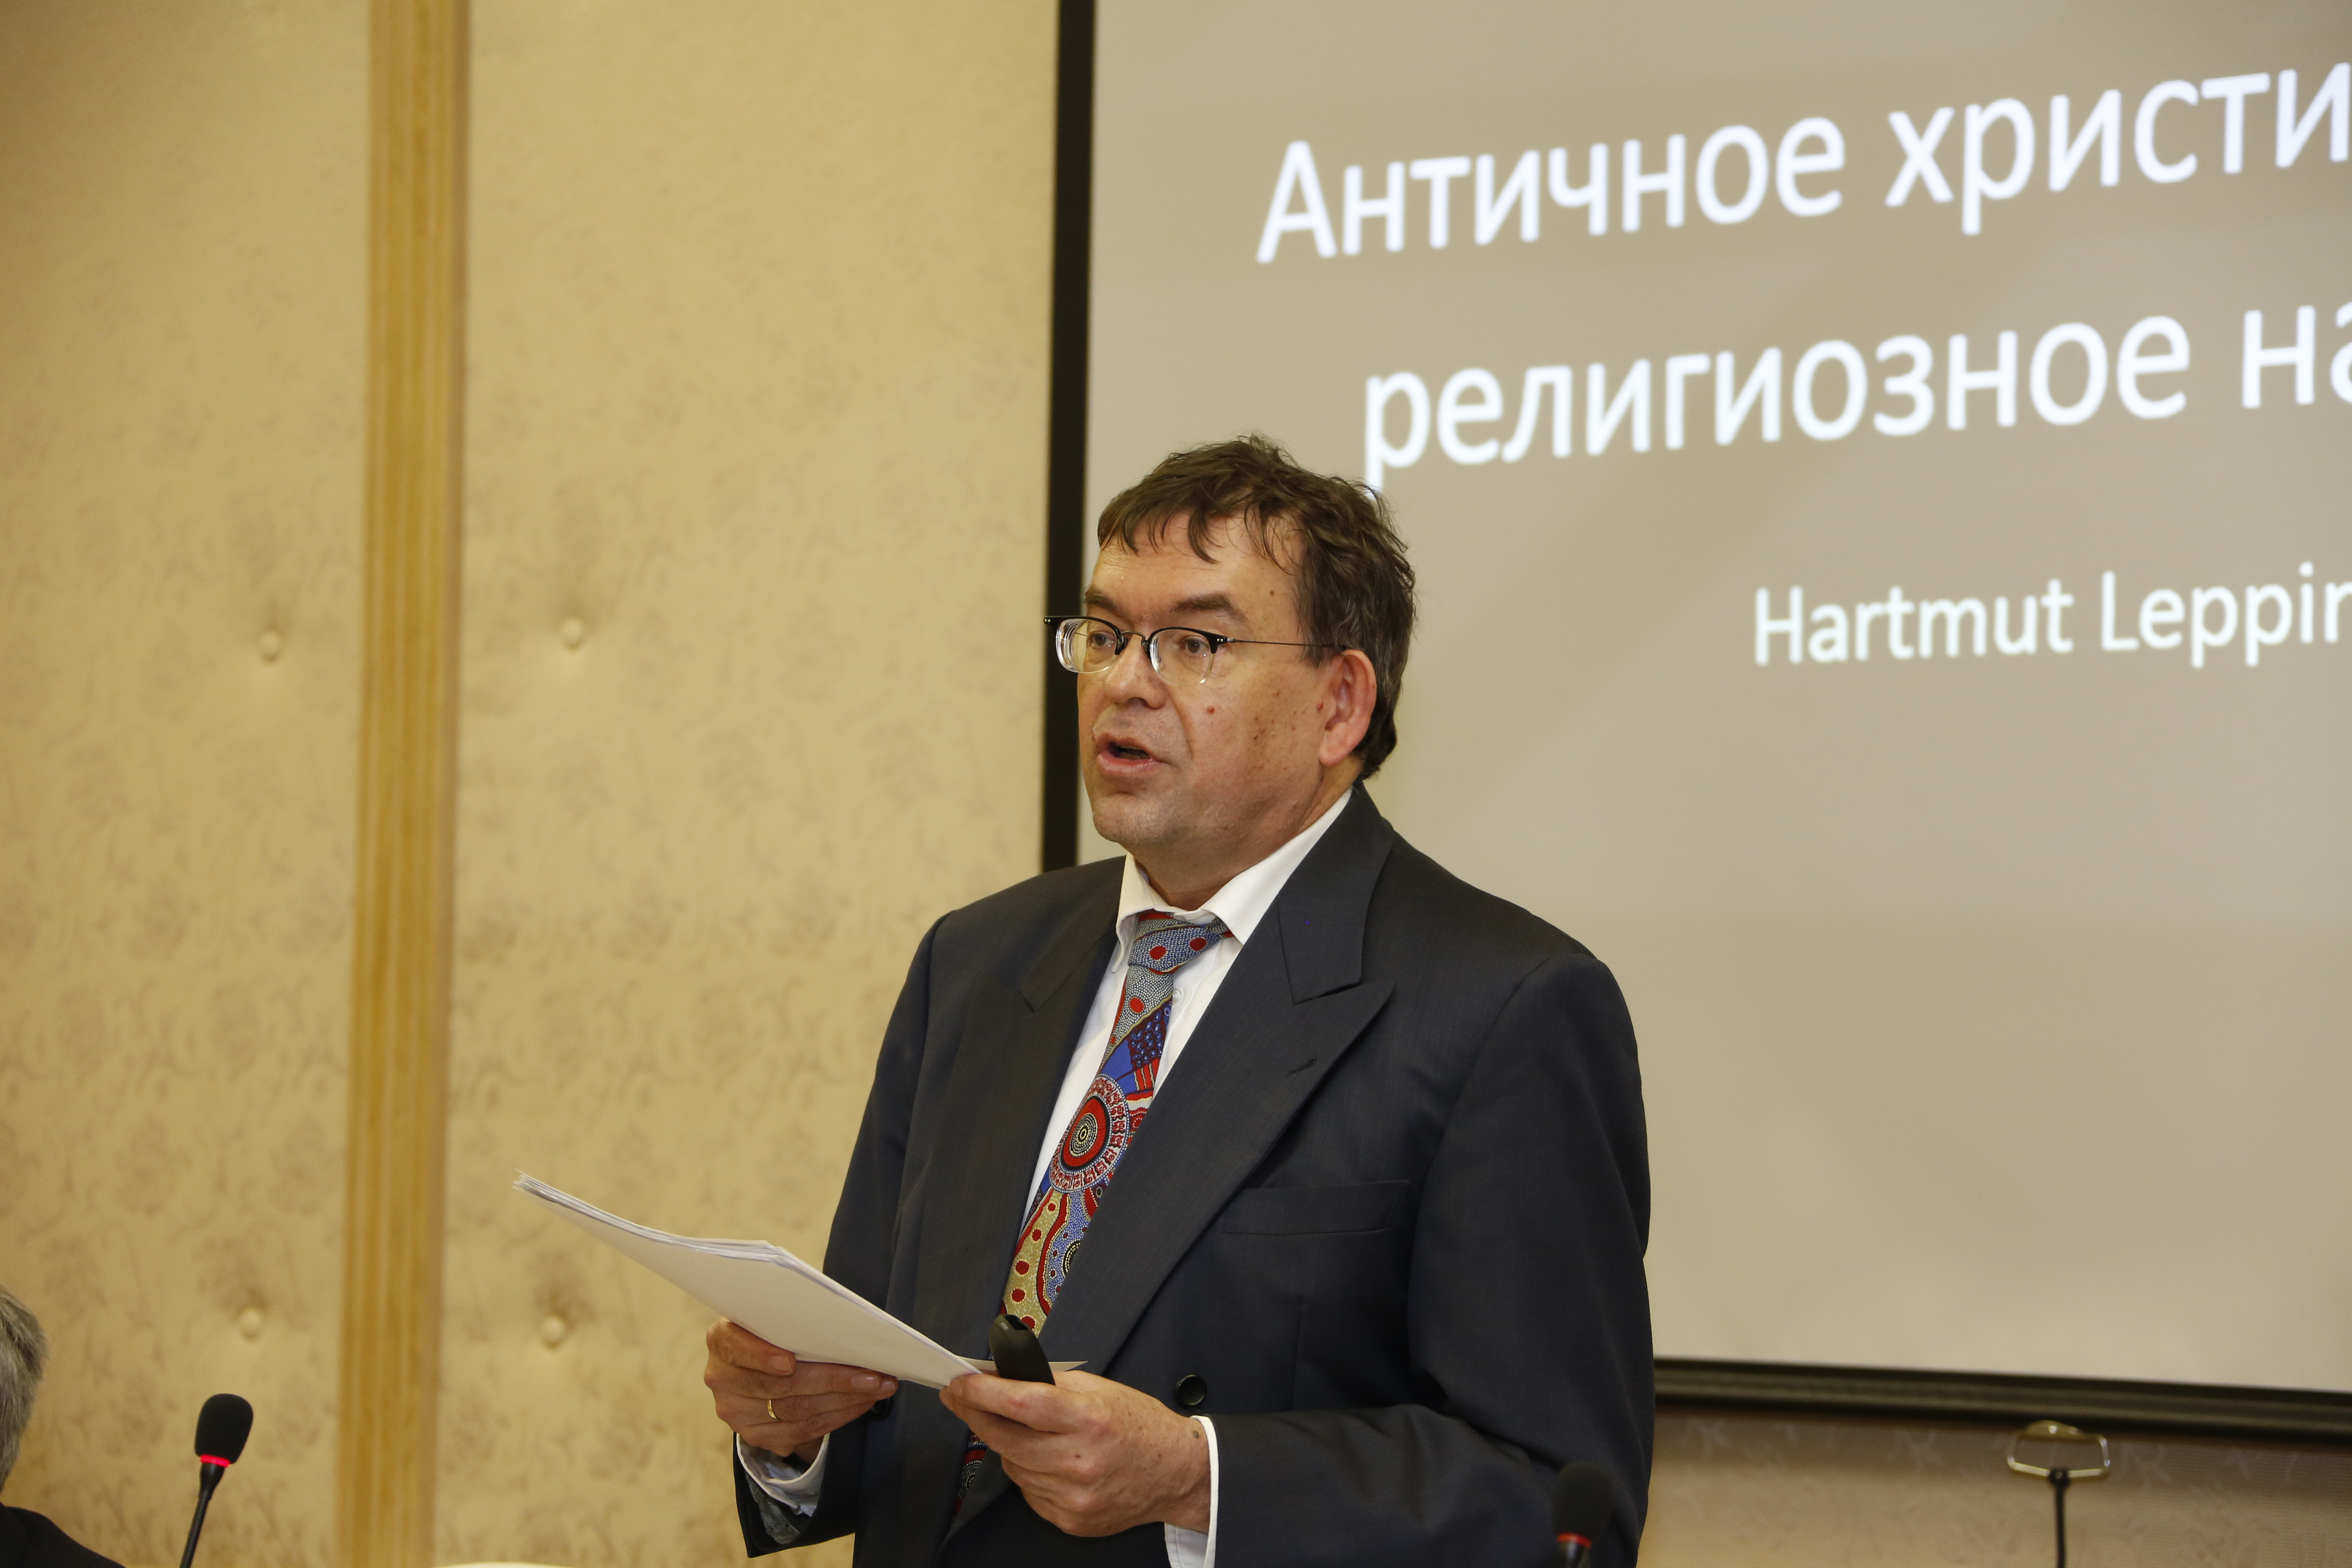 Professor Hartmut Leppin (Goethe University, Frankfurt am Main) at Lomonosov University in Moscow